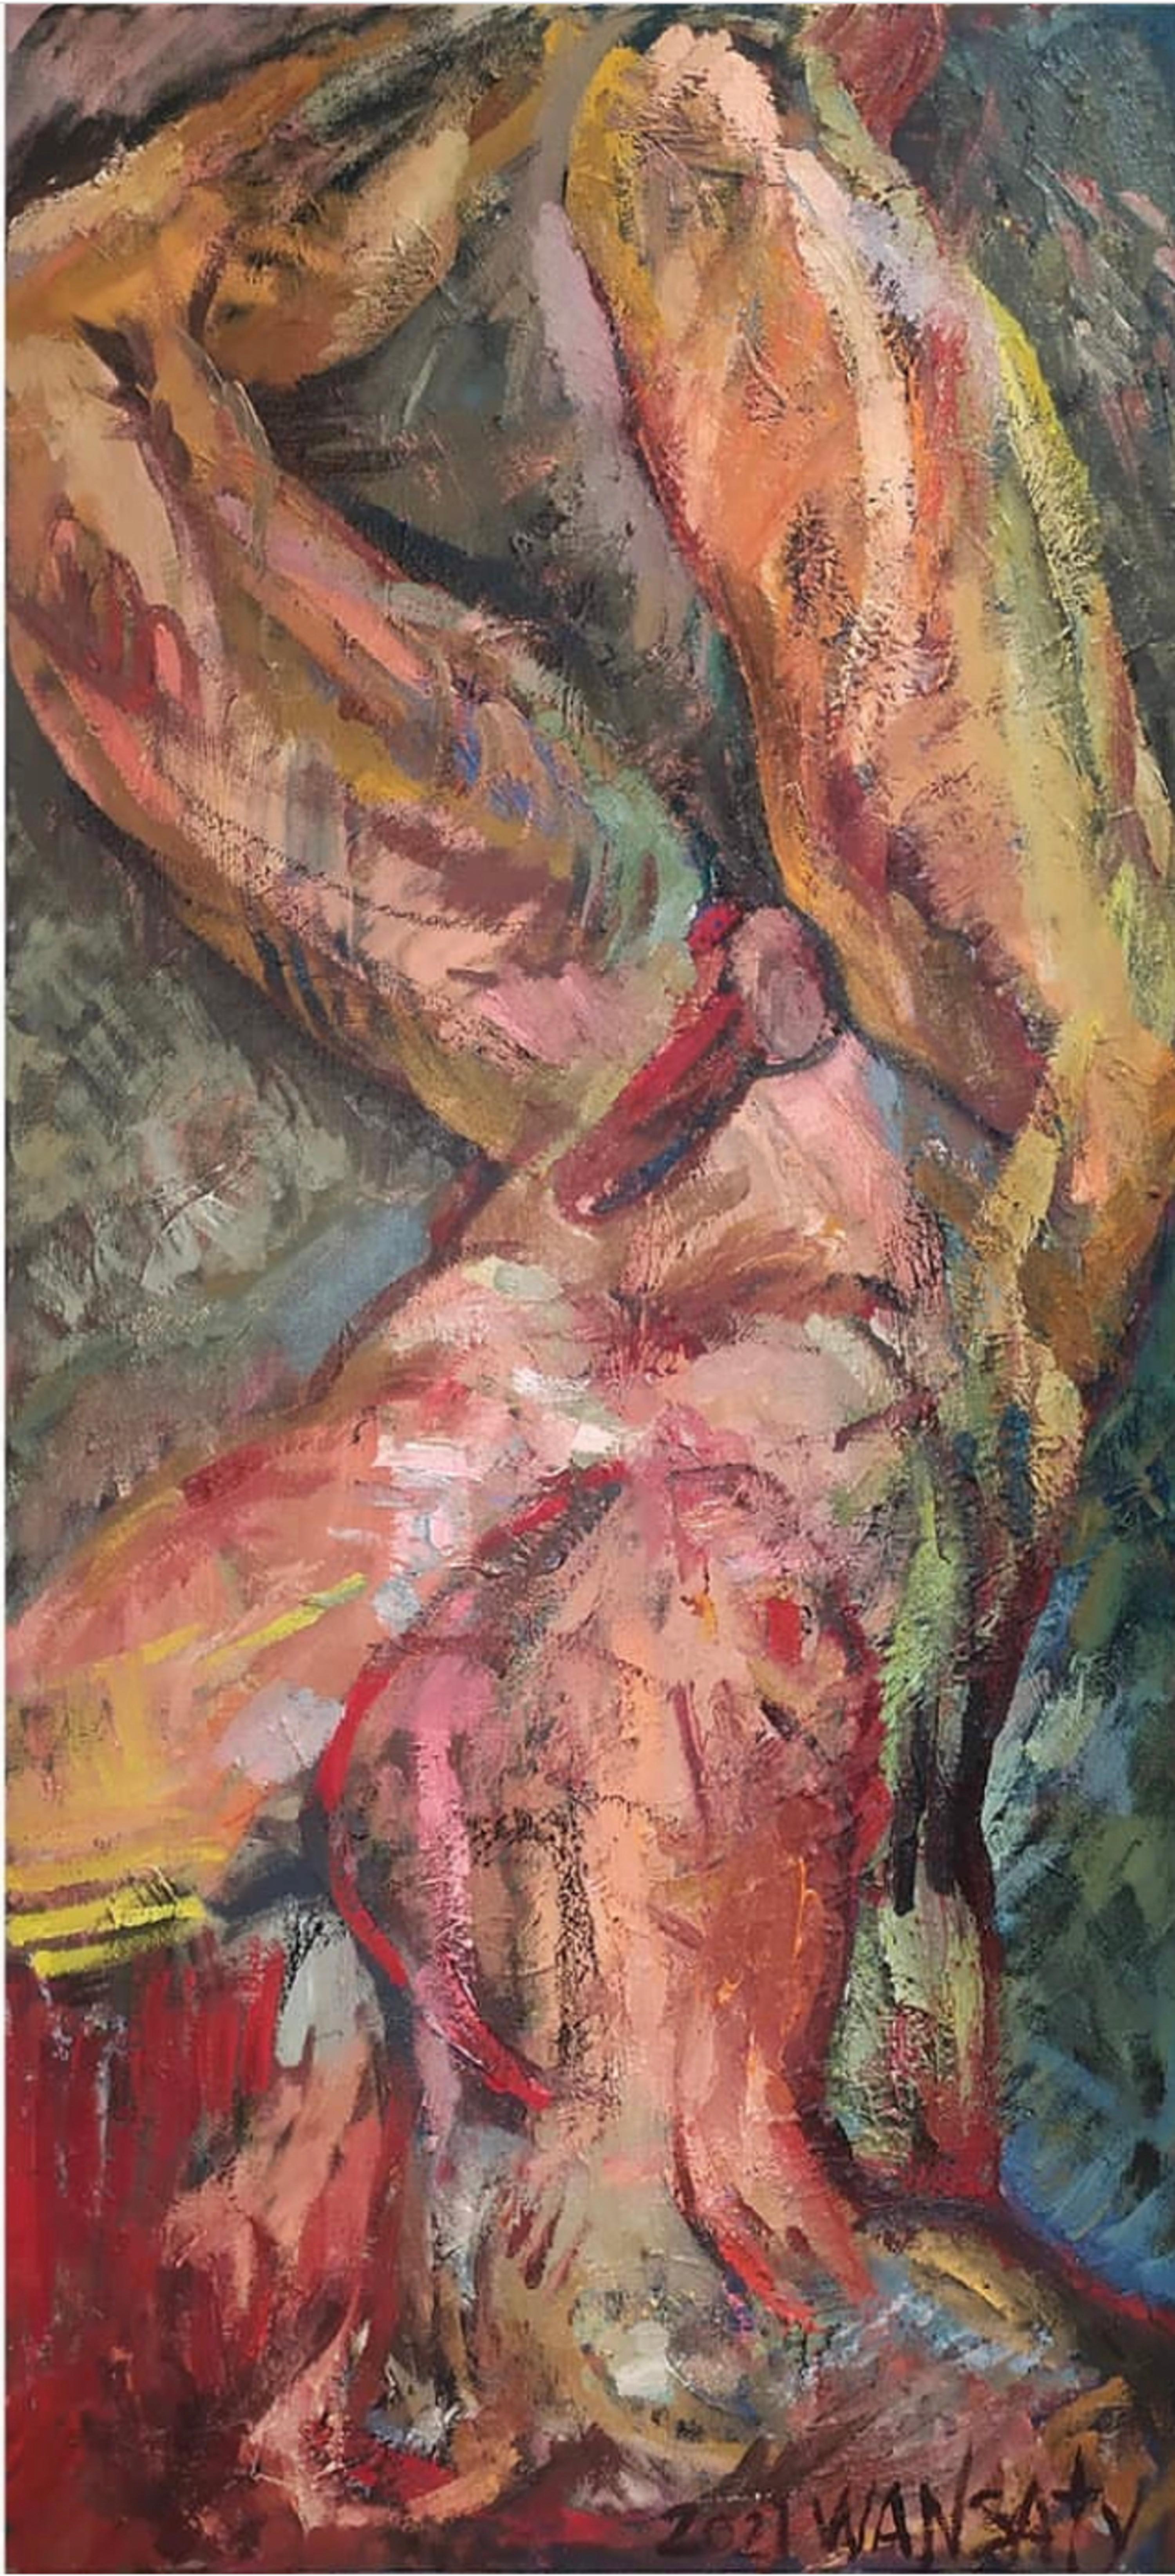 Tatiana Levchenko Nude Painting - Man 1, 120x55cm